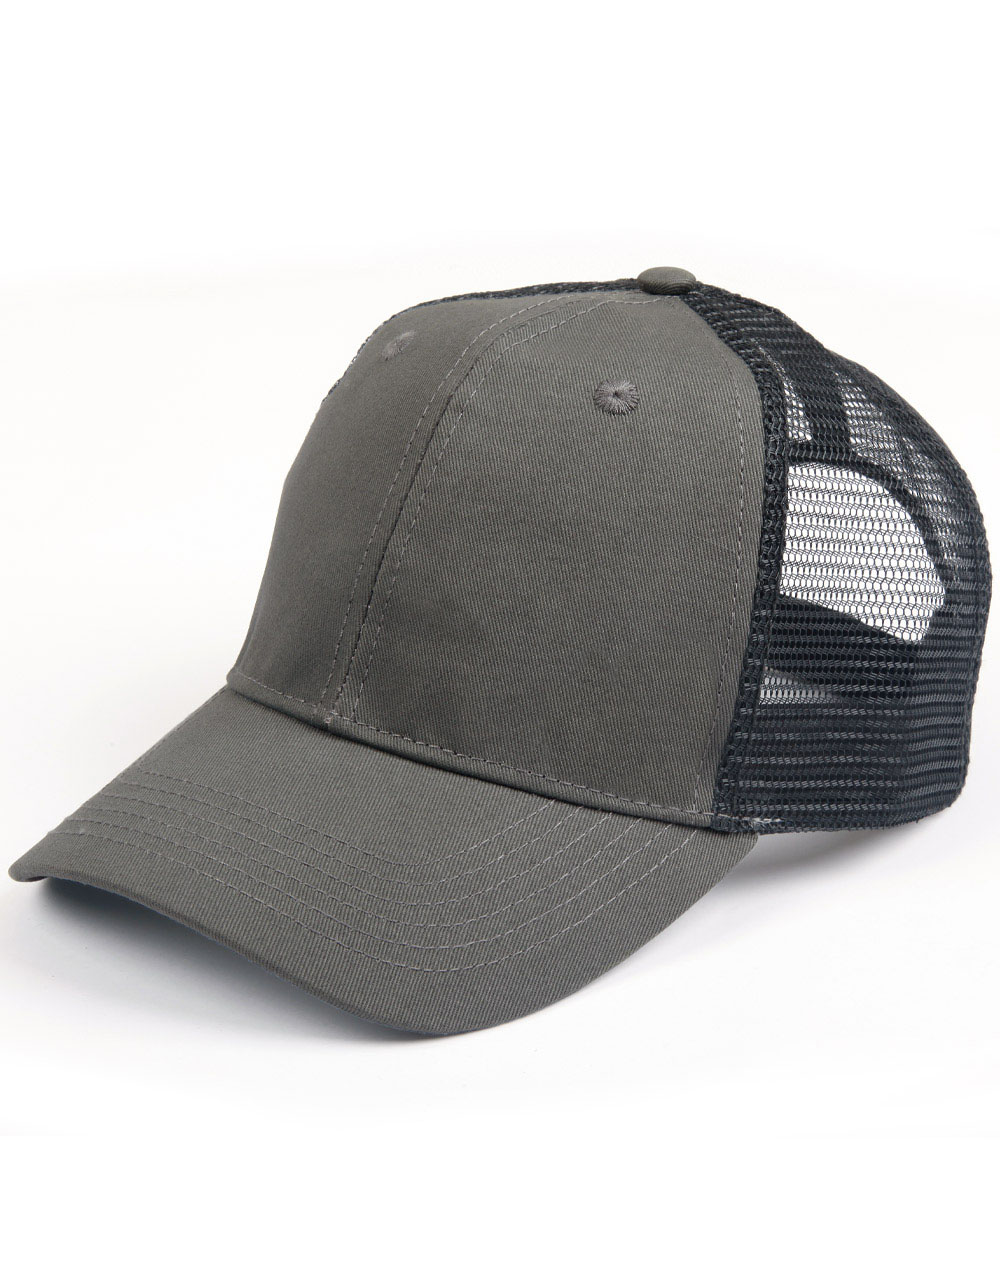 *Item CH89 Cotton Trucker cap. | Buy Your Custom Headwear from Caps R Us